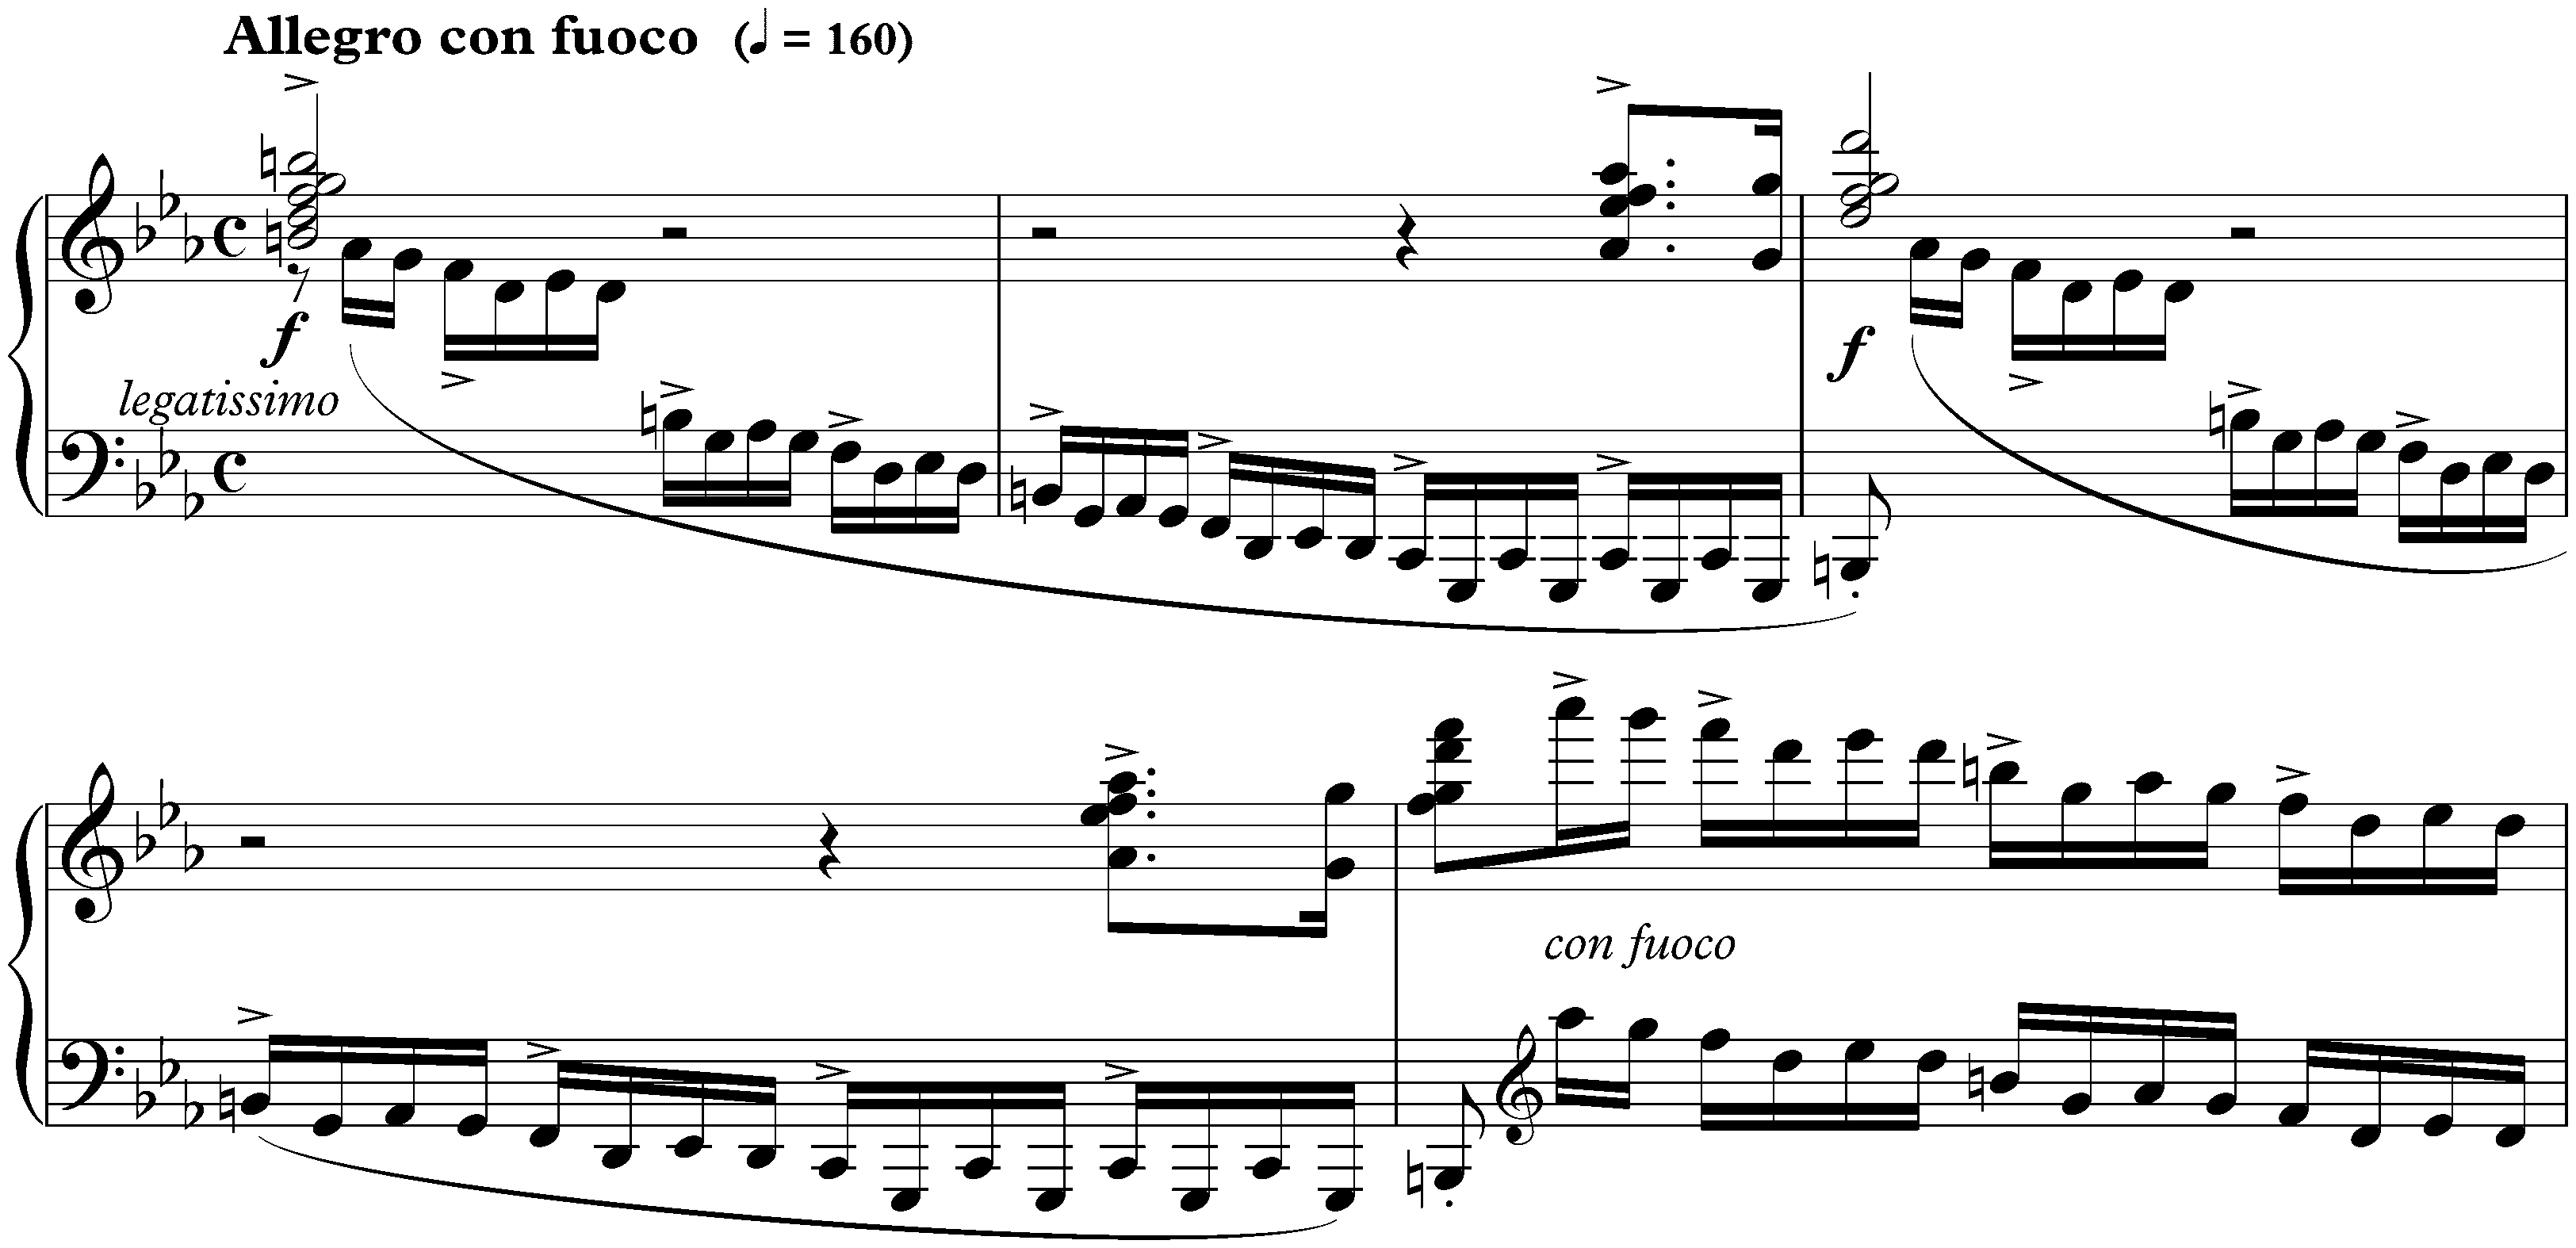 Twelve Études, op. 10; 12. C minor